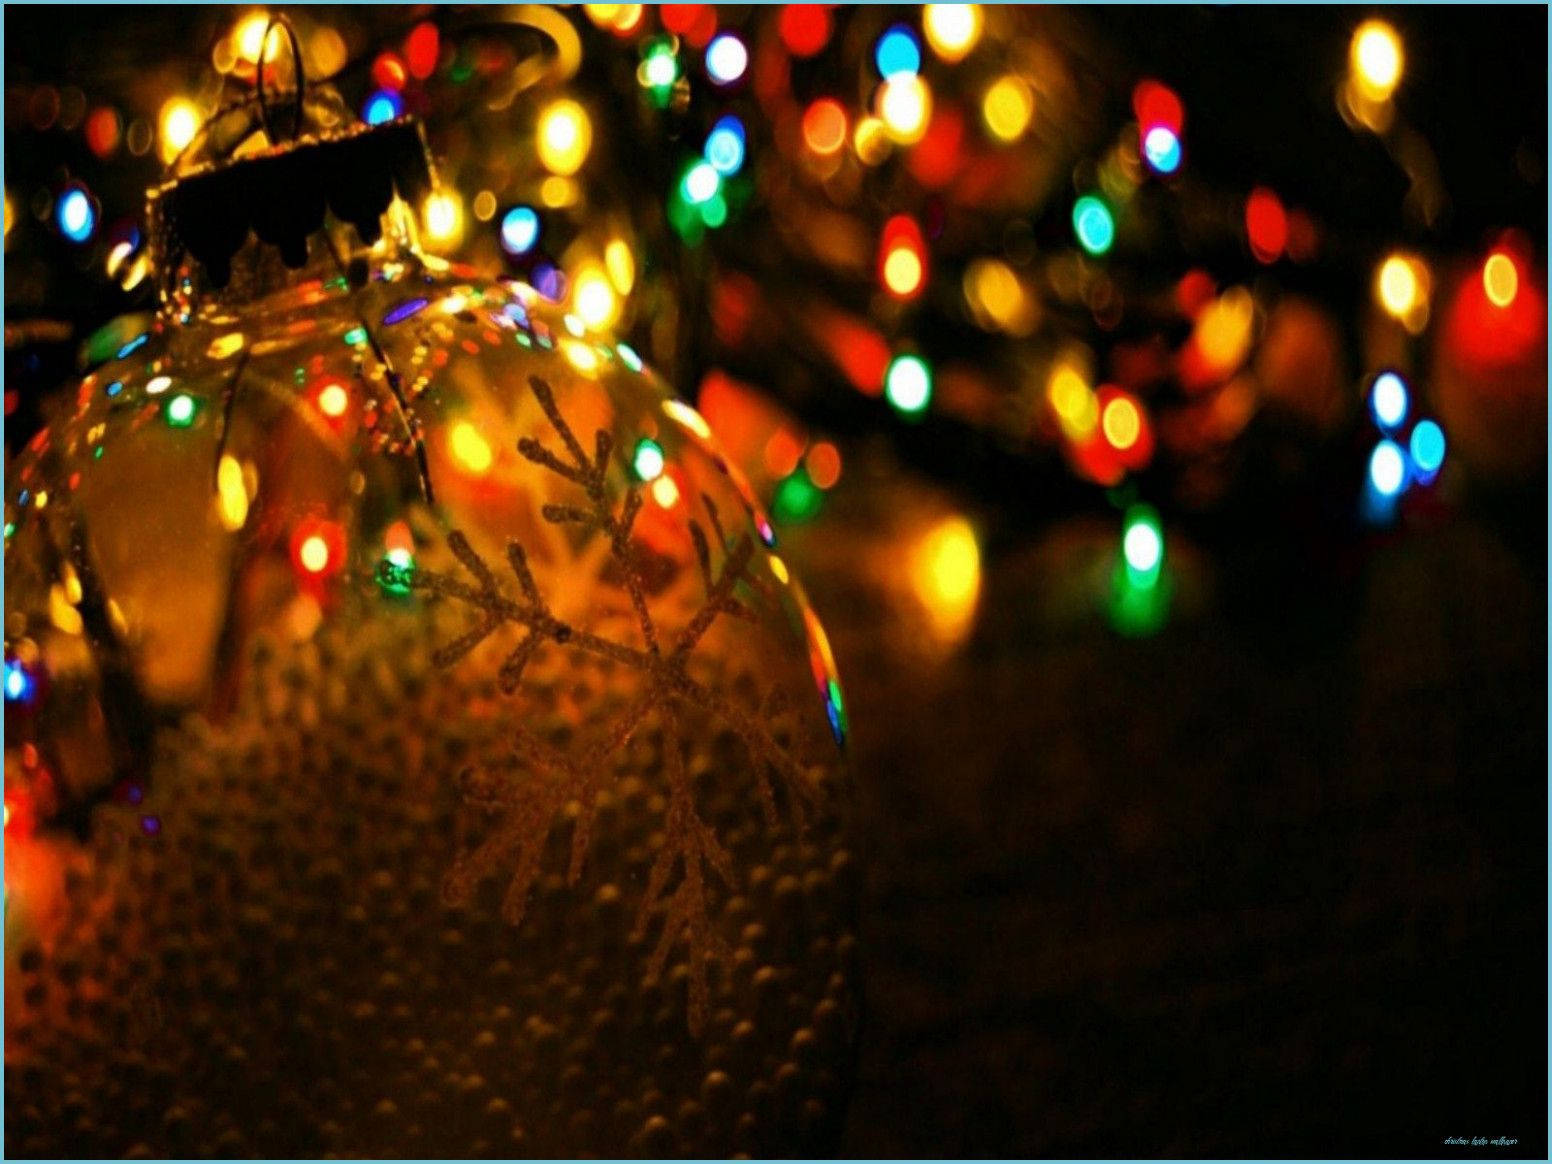 A Brilliantly Lit Christmas Tree Brings Joy and Holiday Cheer Wallpaper